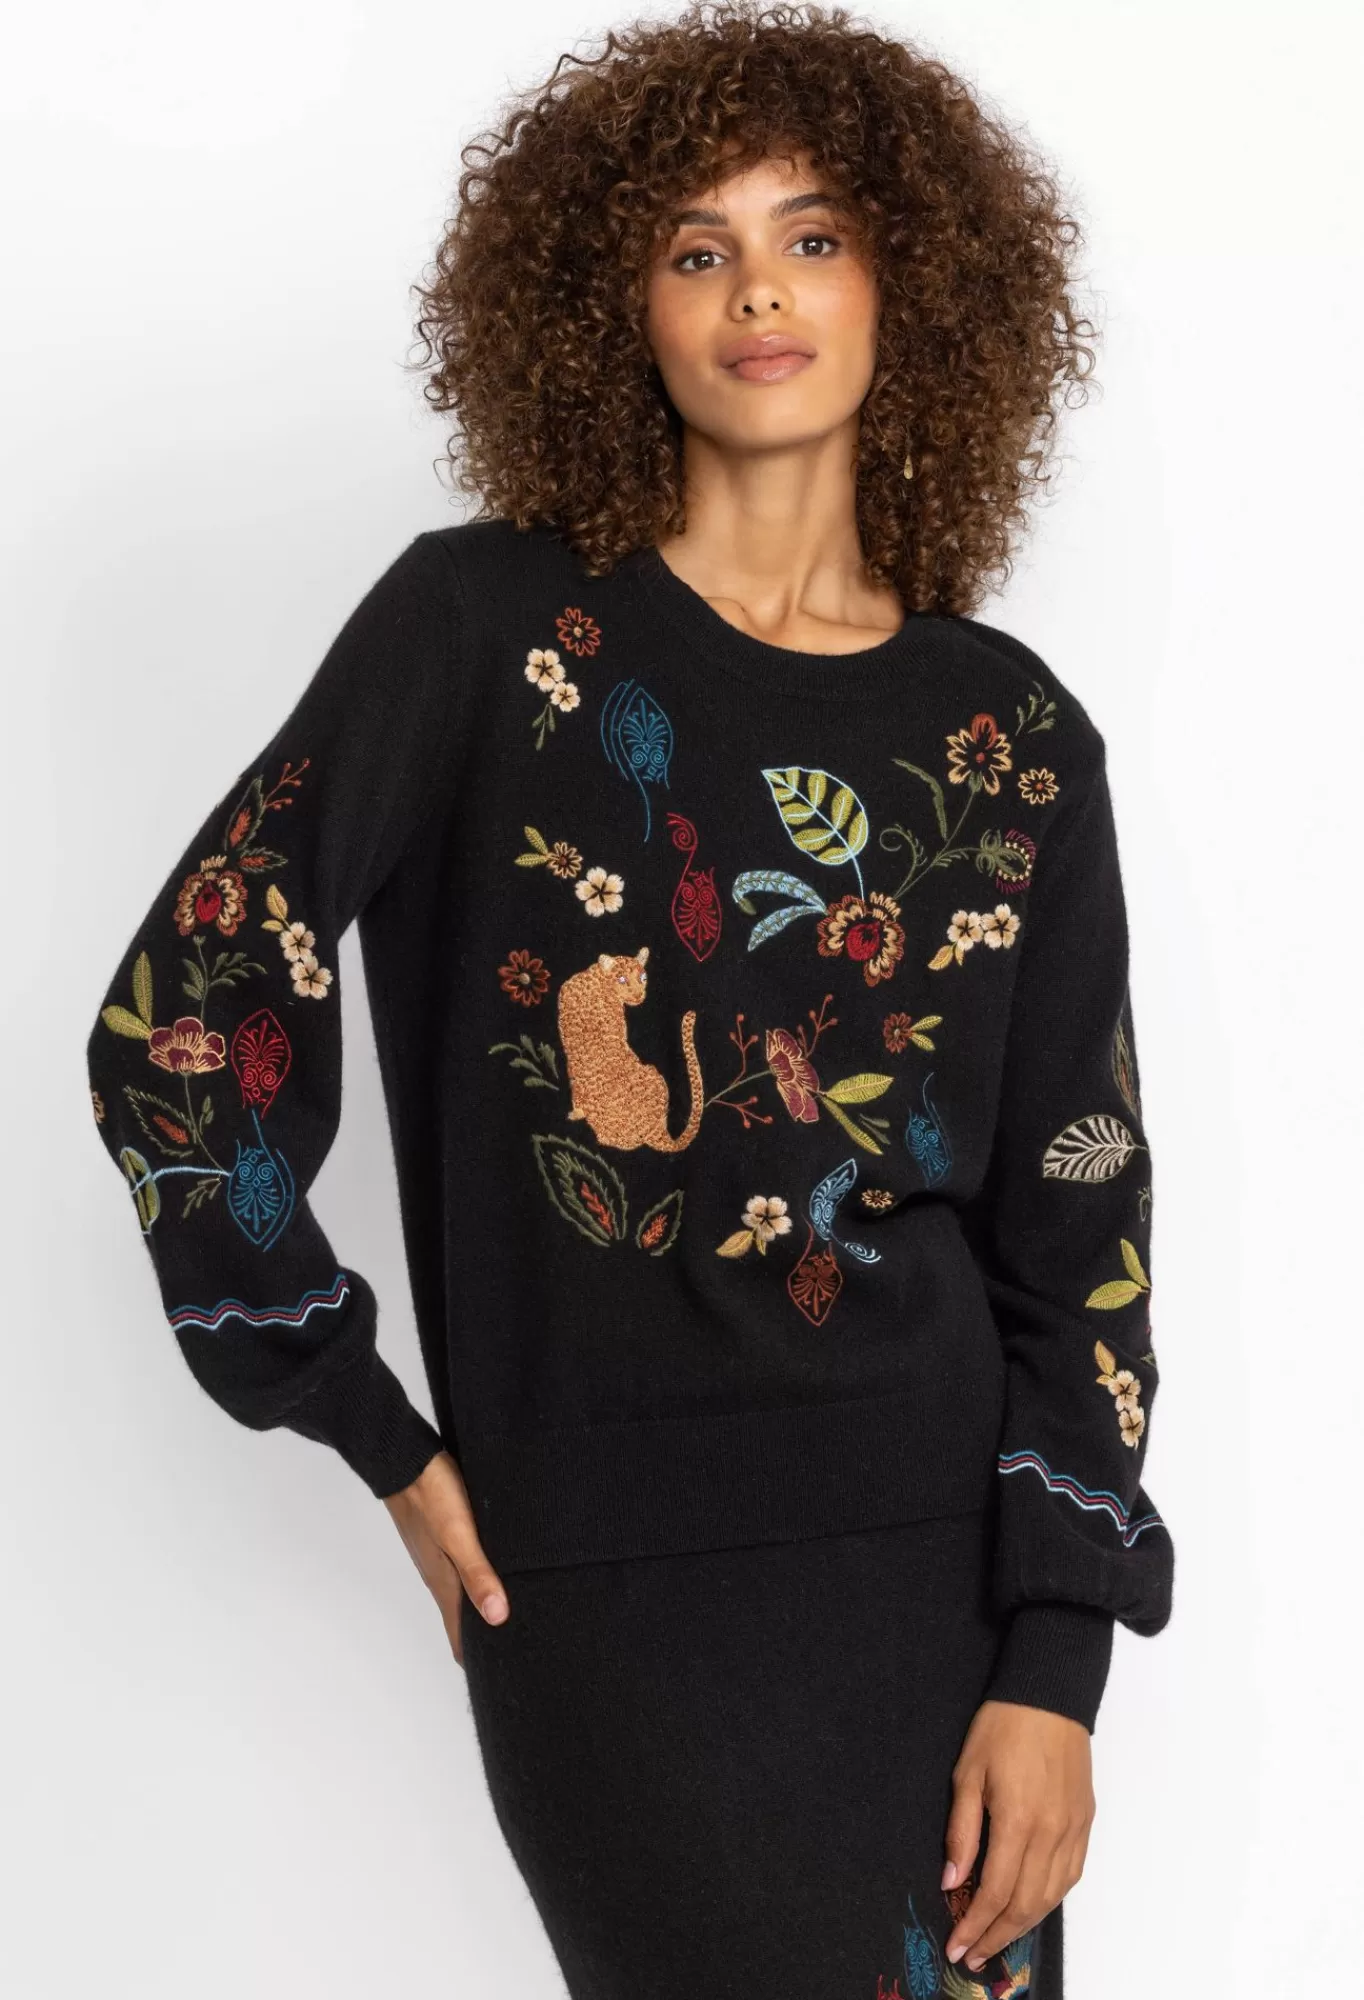 Flash Sale Isabella Sweater Top Women Tops